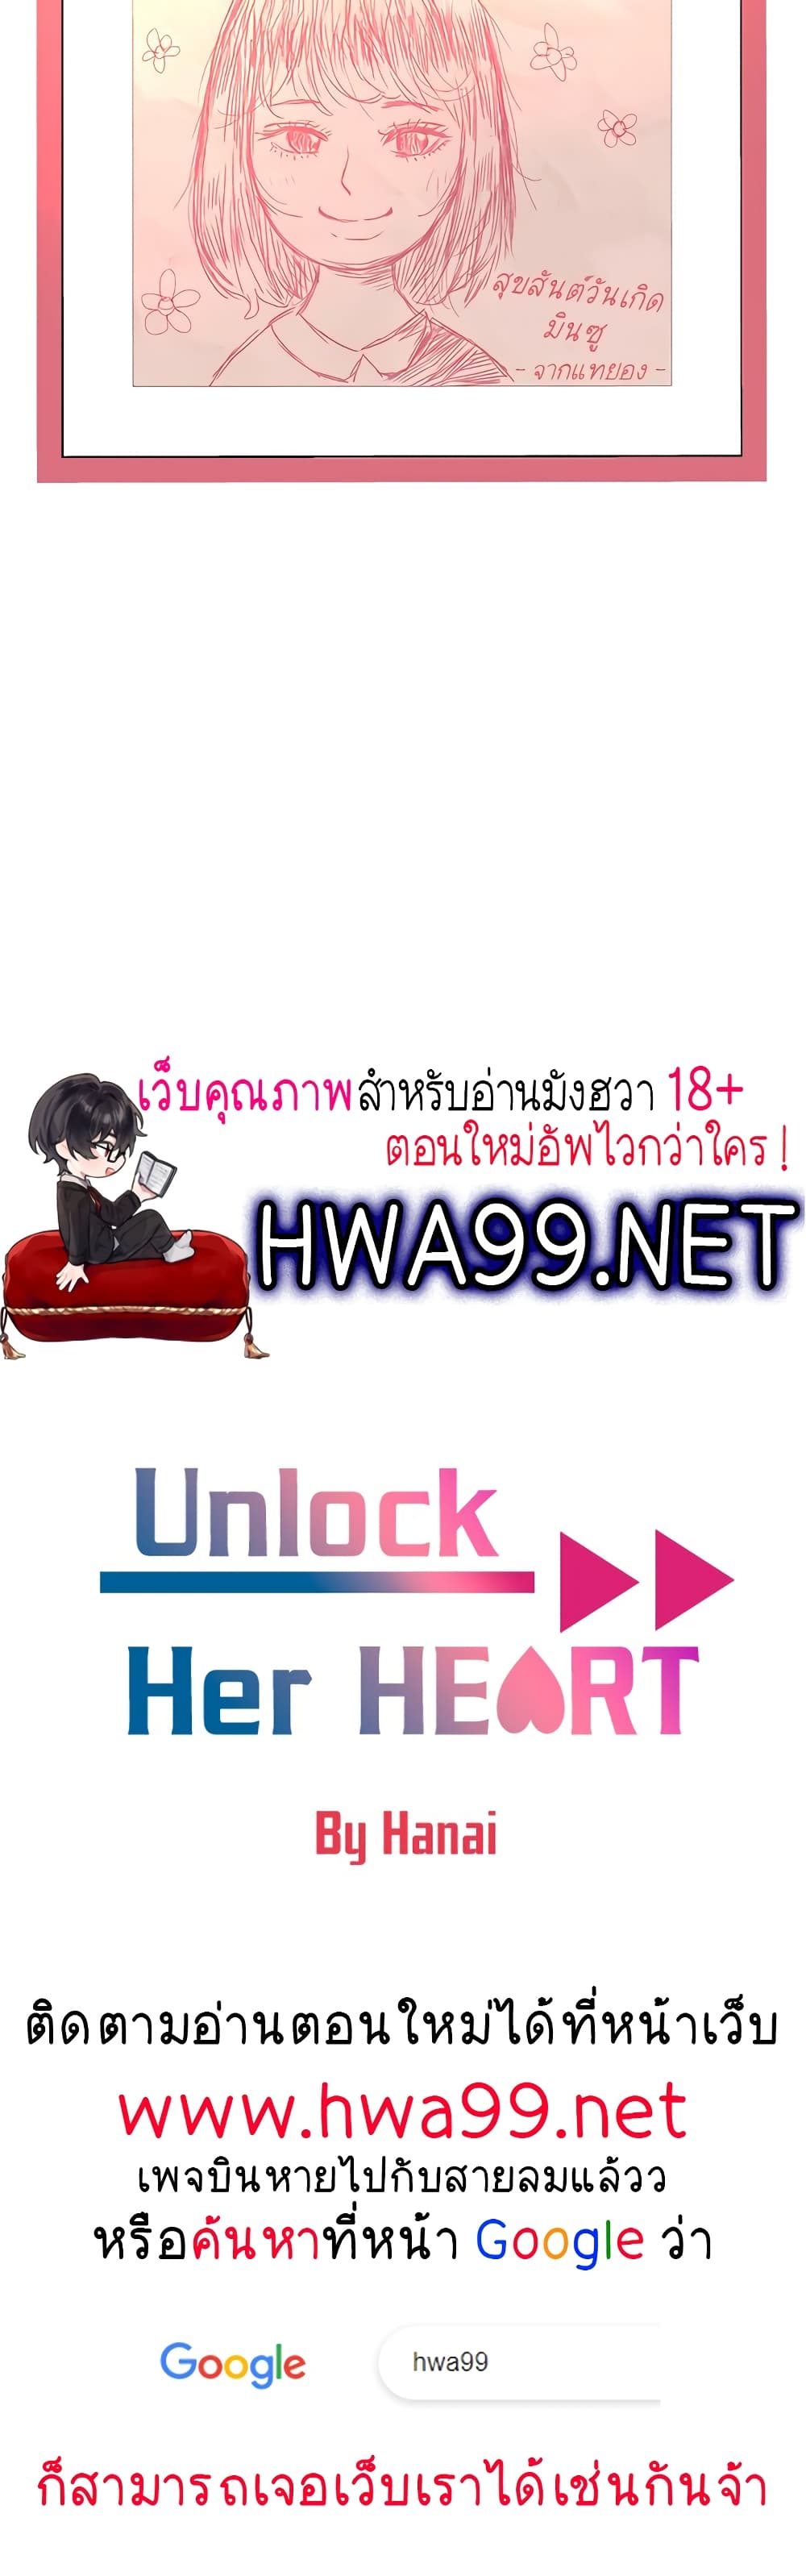 Unlock Her Heart 12-12